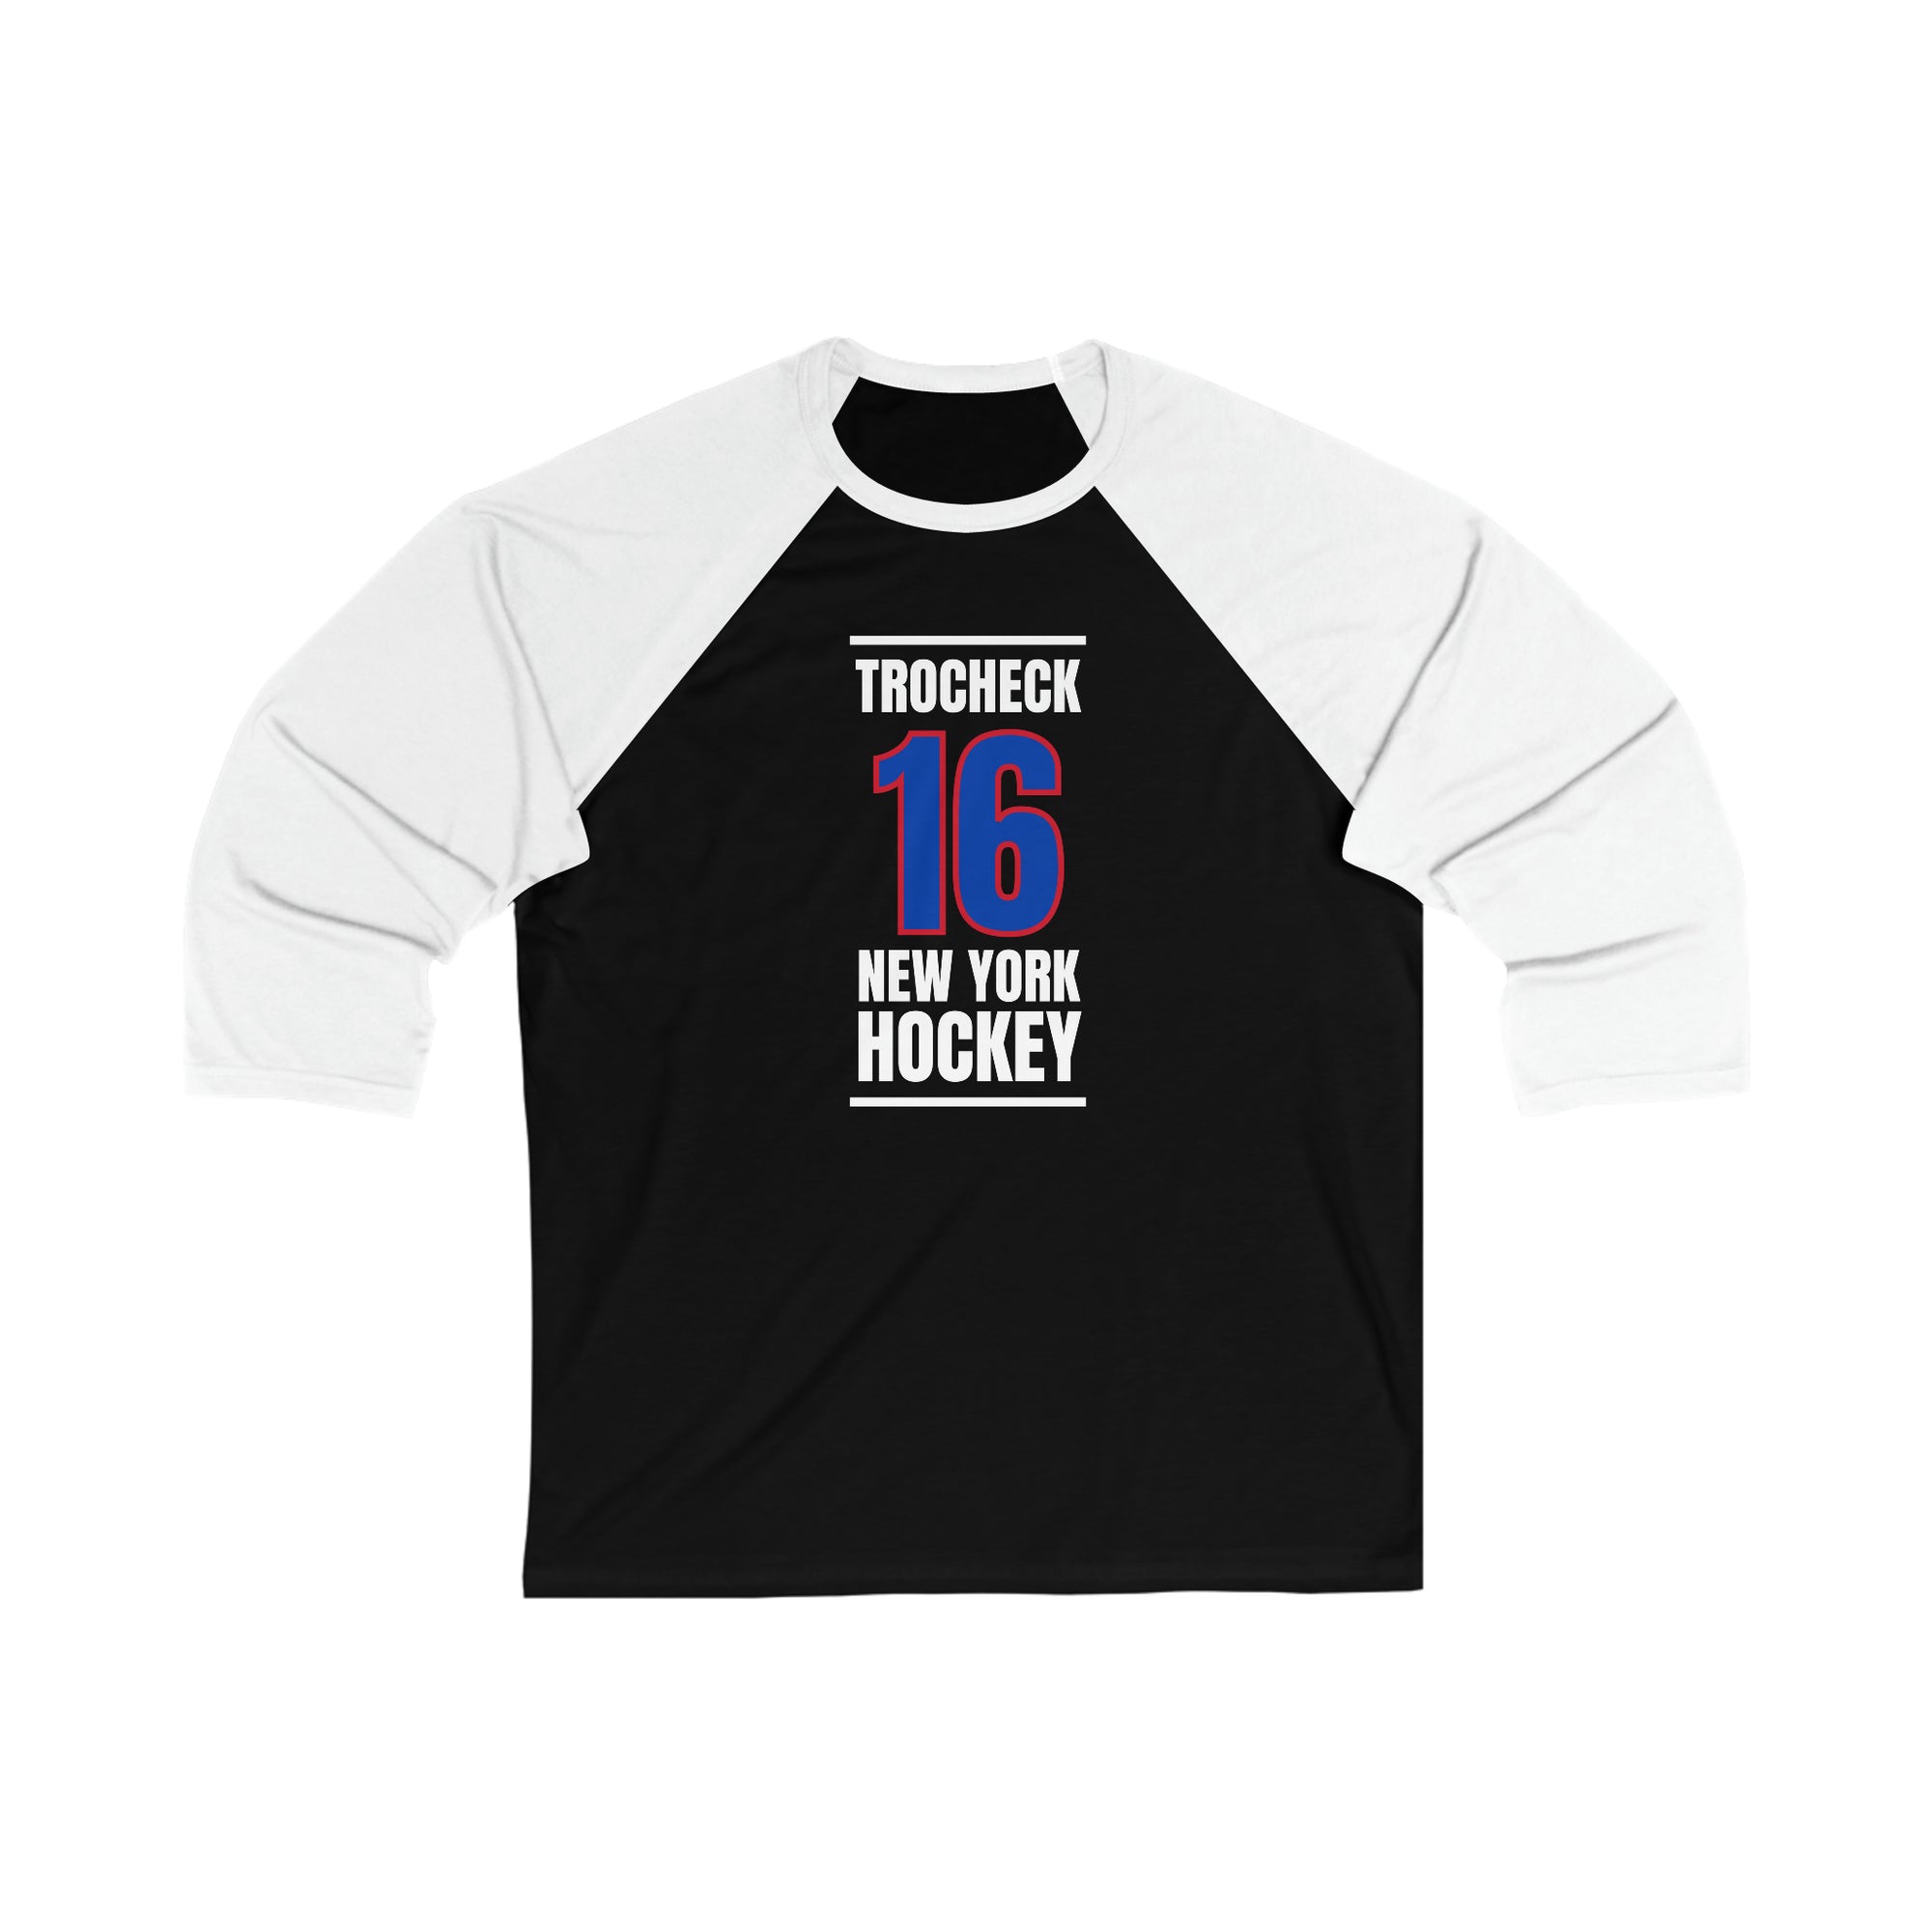 Trocheck 16 New York Hockey Royal Blue Vertical Design Unisex Tri-Blend 3/4 Sleeve Raglan Baseball Shirt